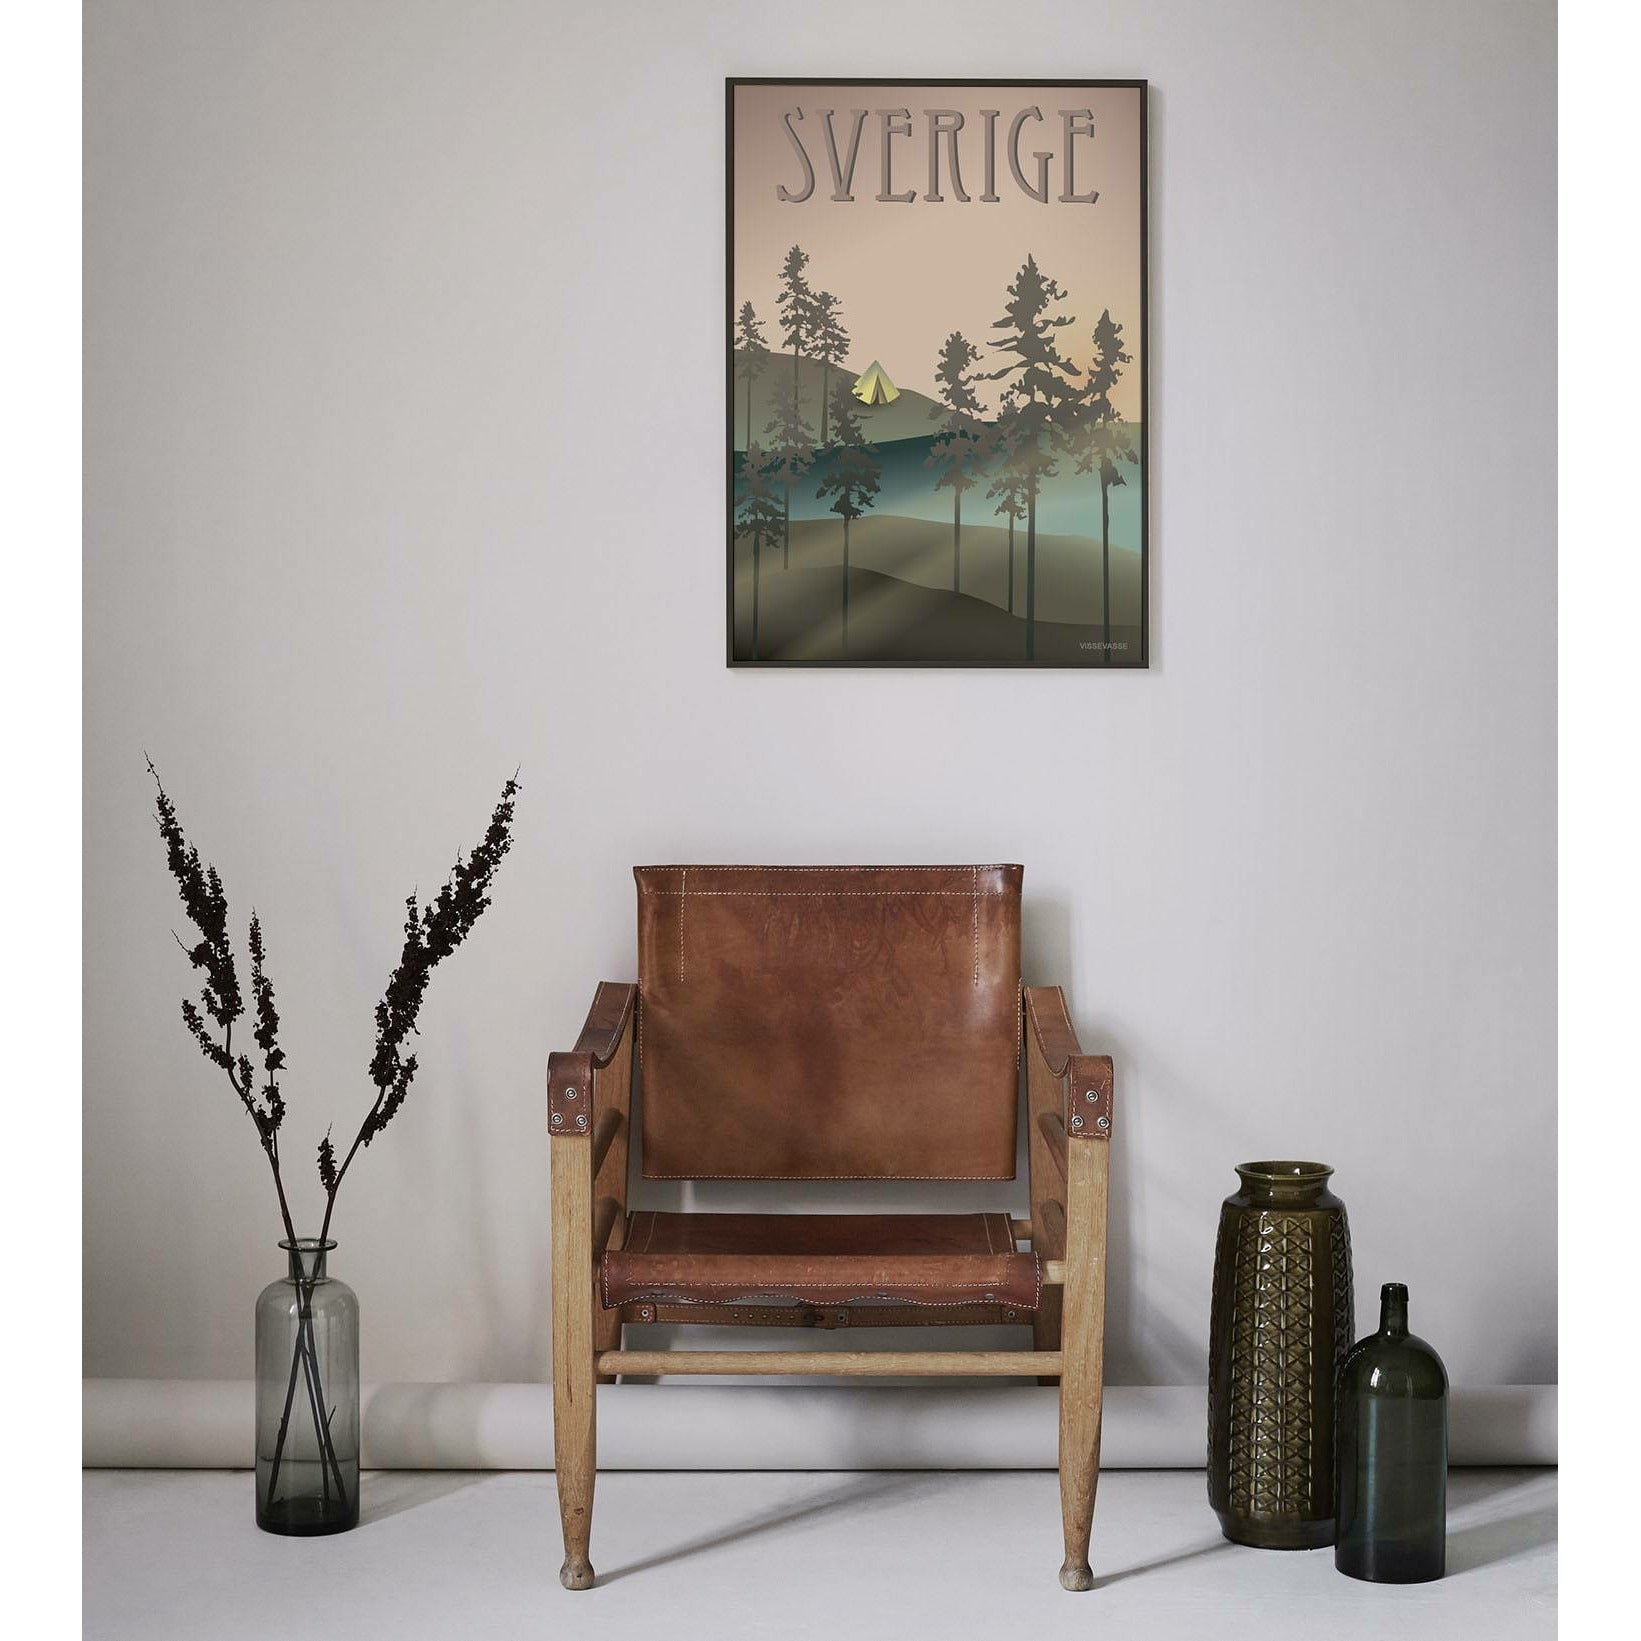 Vissevasse Sverige Forest Poster, 70x100 cm